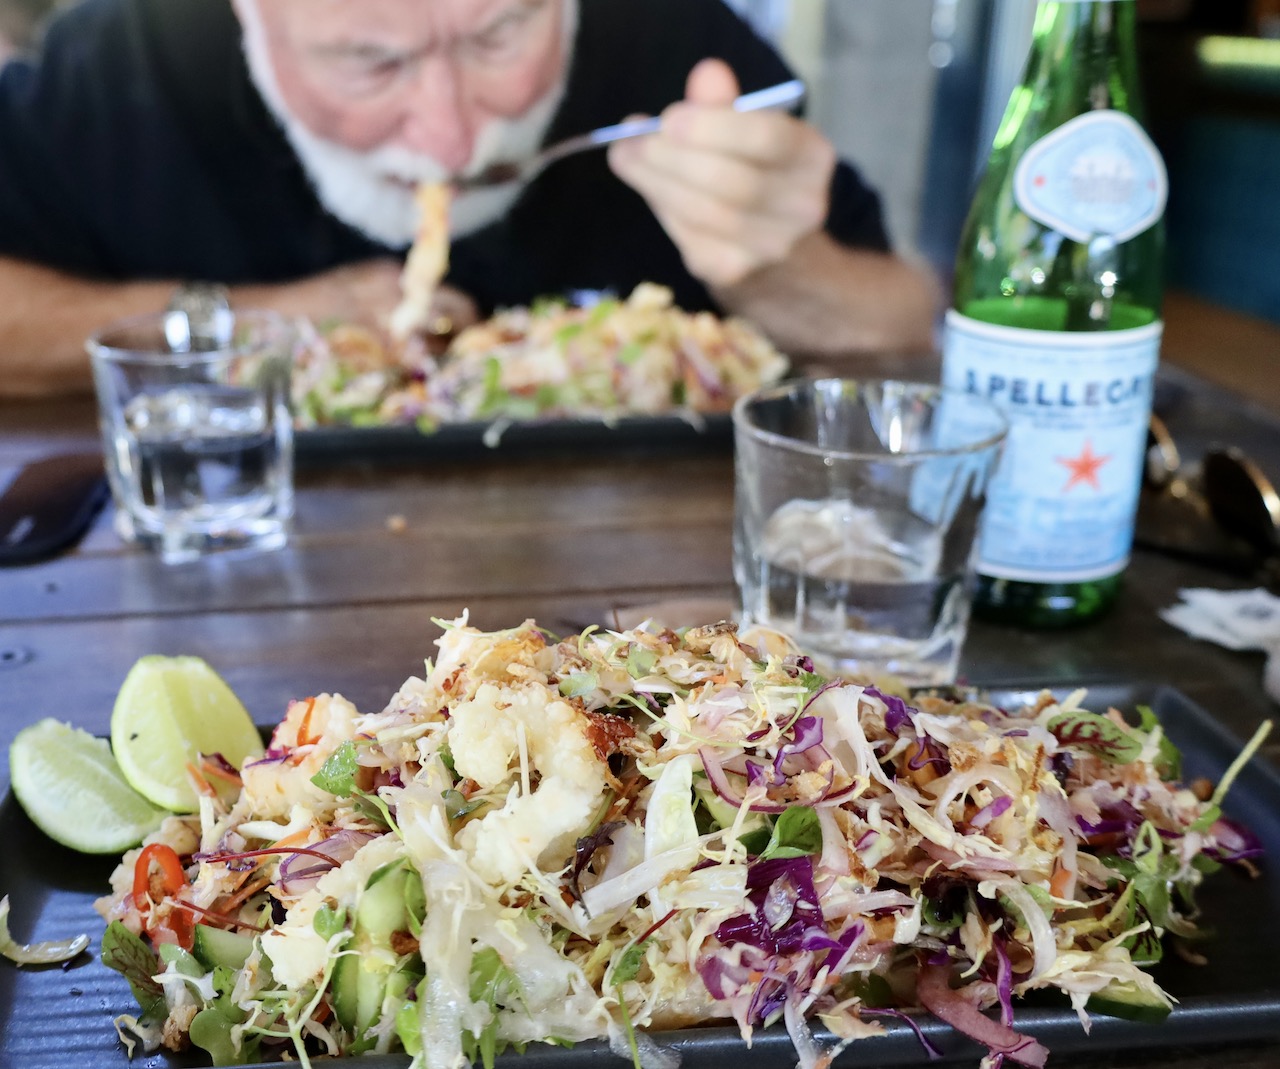 Calamari salad and Pelligrino